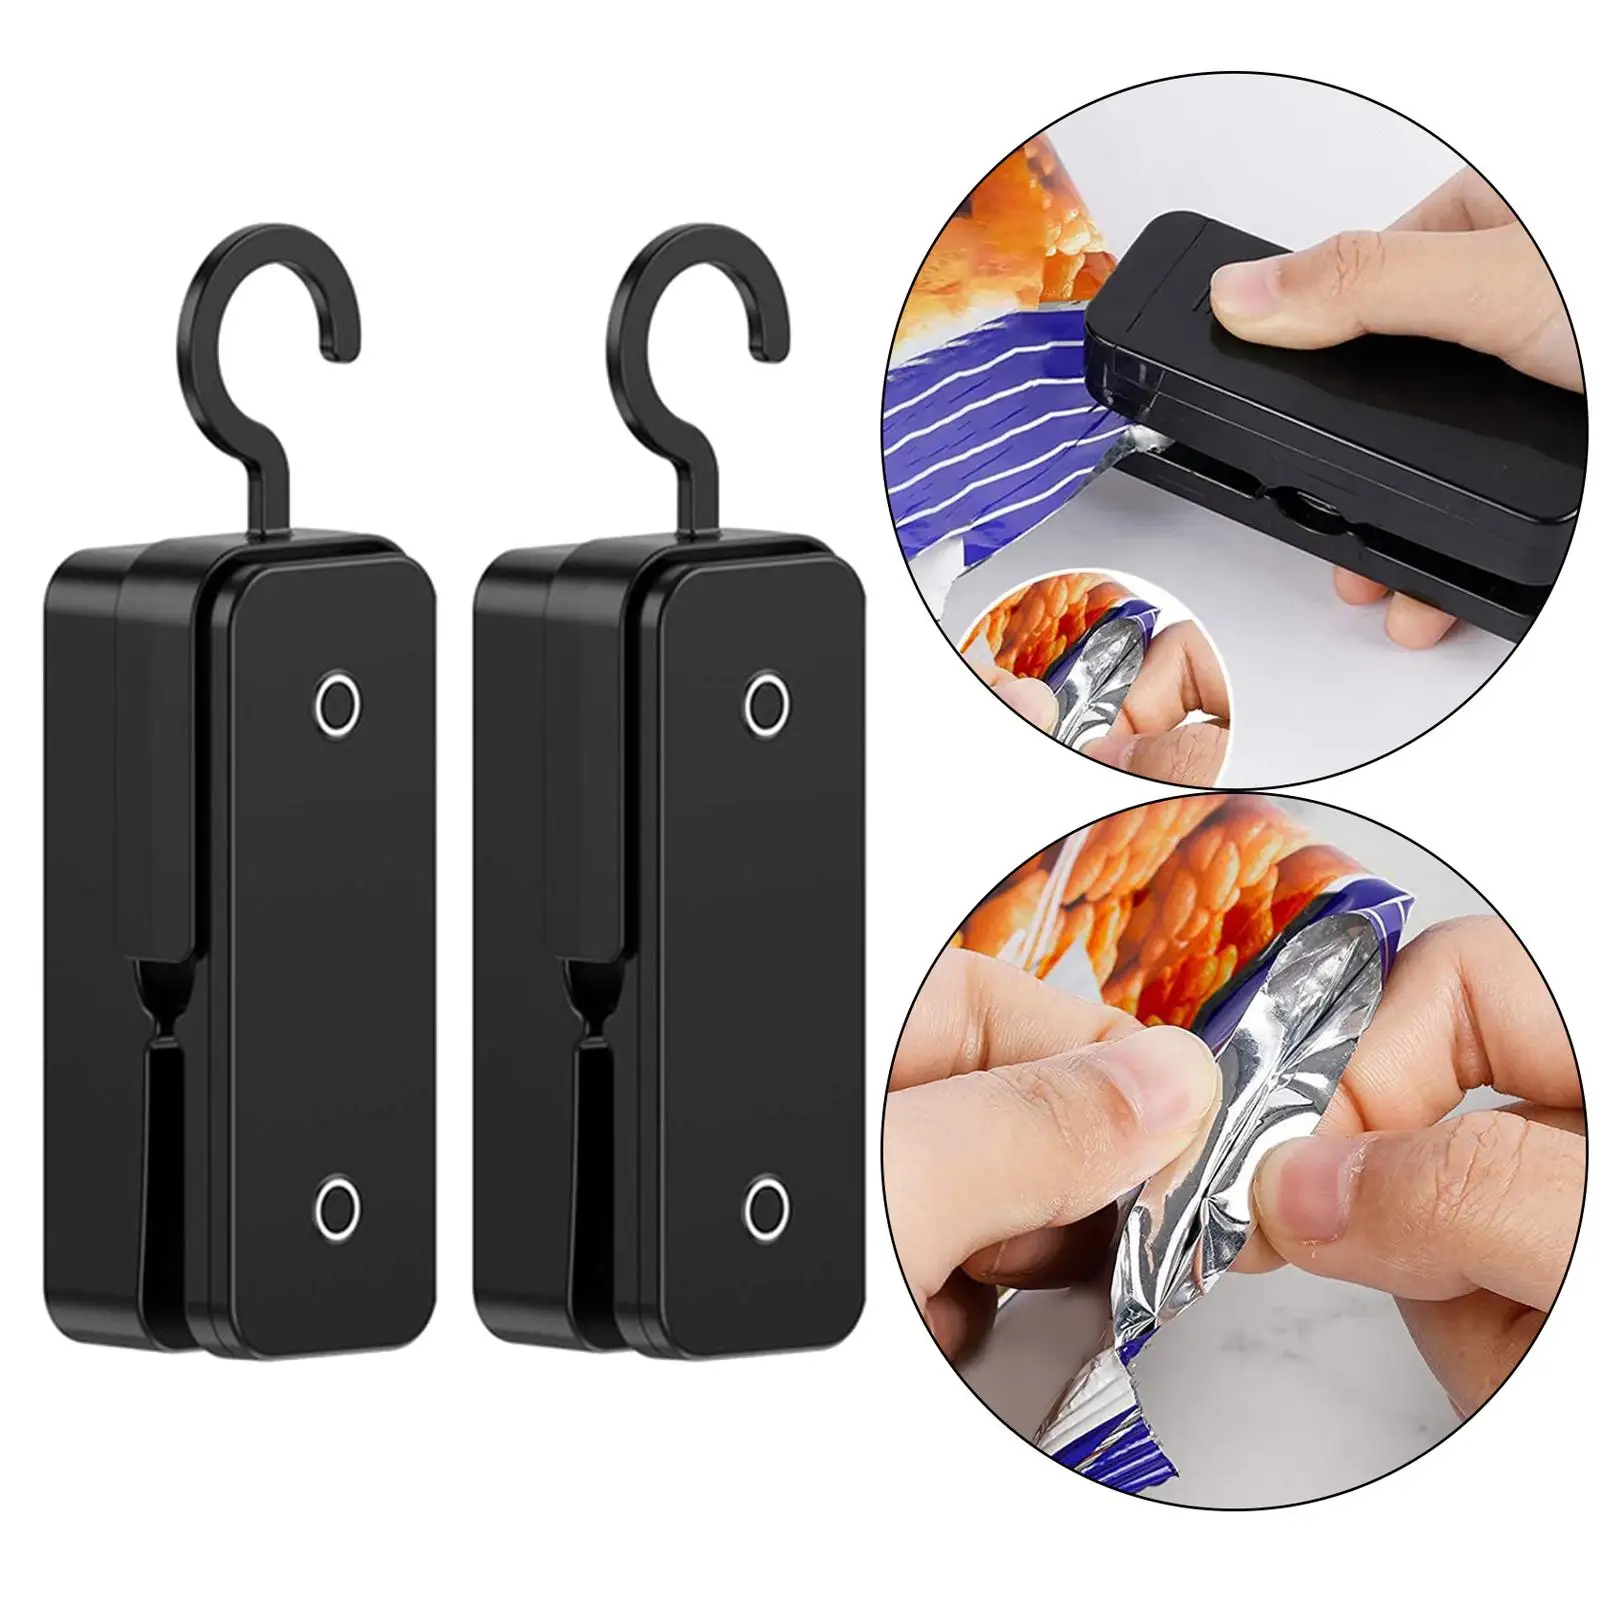 2/Set Battery Operated Pocket Size Bag Sealer with Cutter Food Bag Sealer for Chip Bags, Snack Bags, Foil Bag, Plastic Bags,